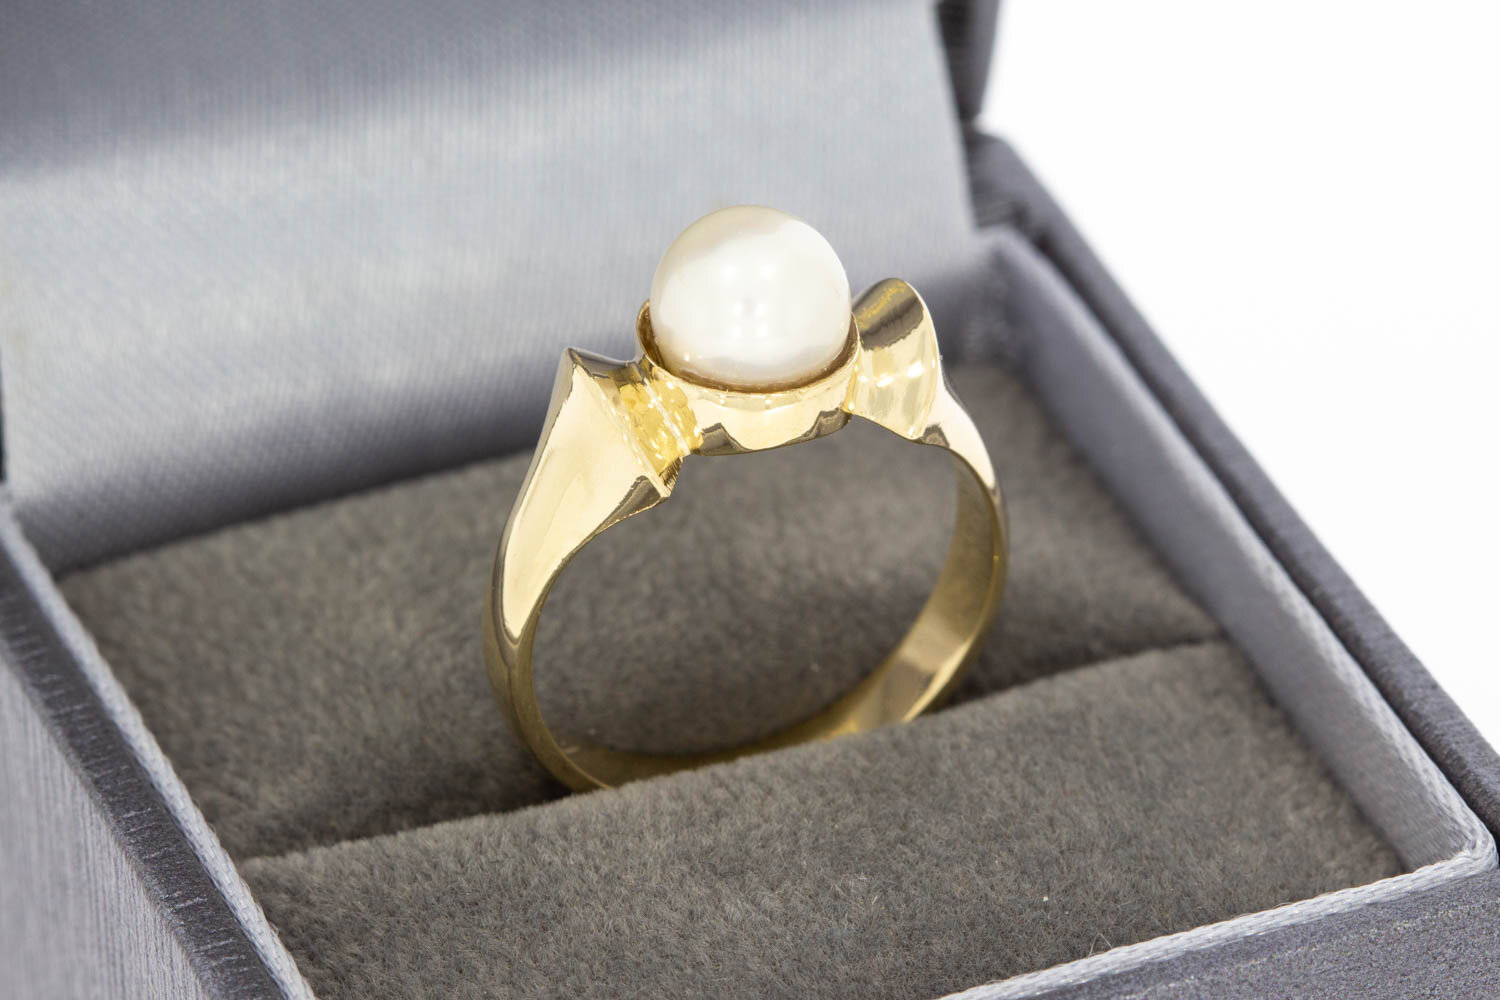 Perlenring 14 Karat Gold - Ringgröße 17,5 mm